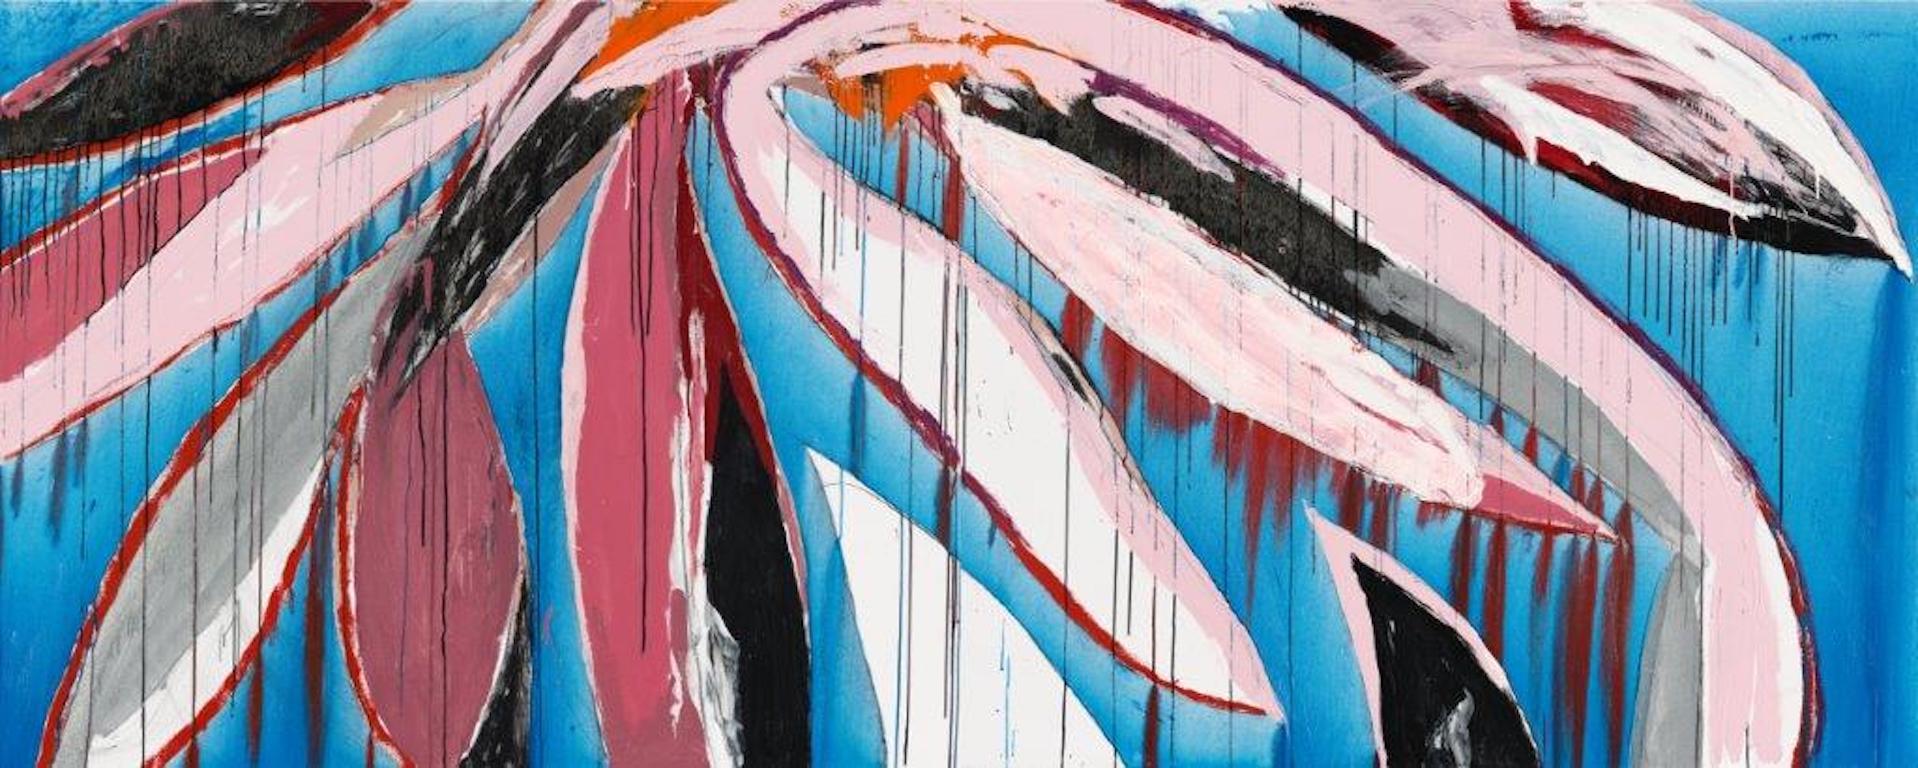 Javier Arizmendi-Kalb Abstract Painting - (De) Liro - abstract painting (diptych) oil on canvas 4x10 feet